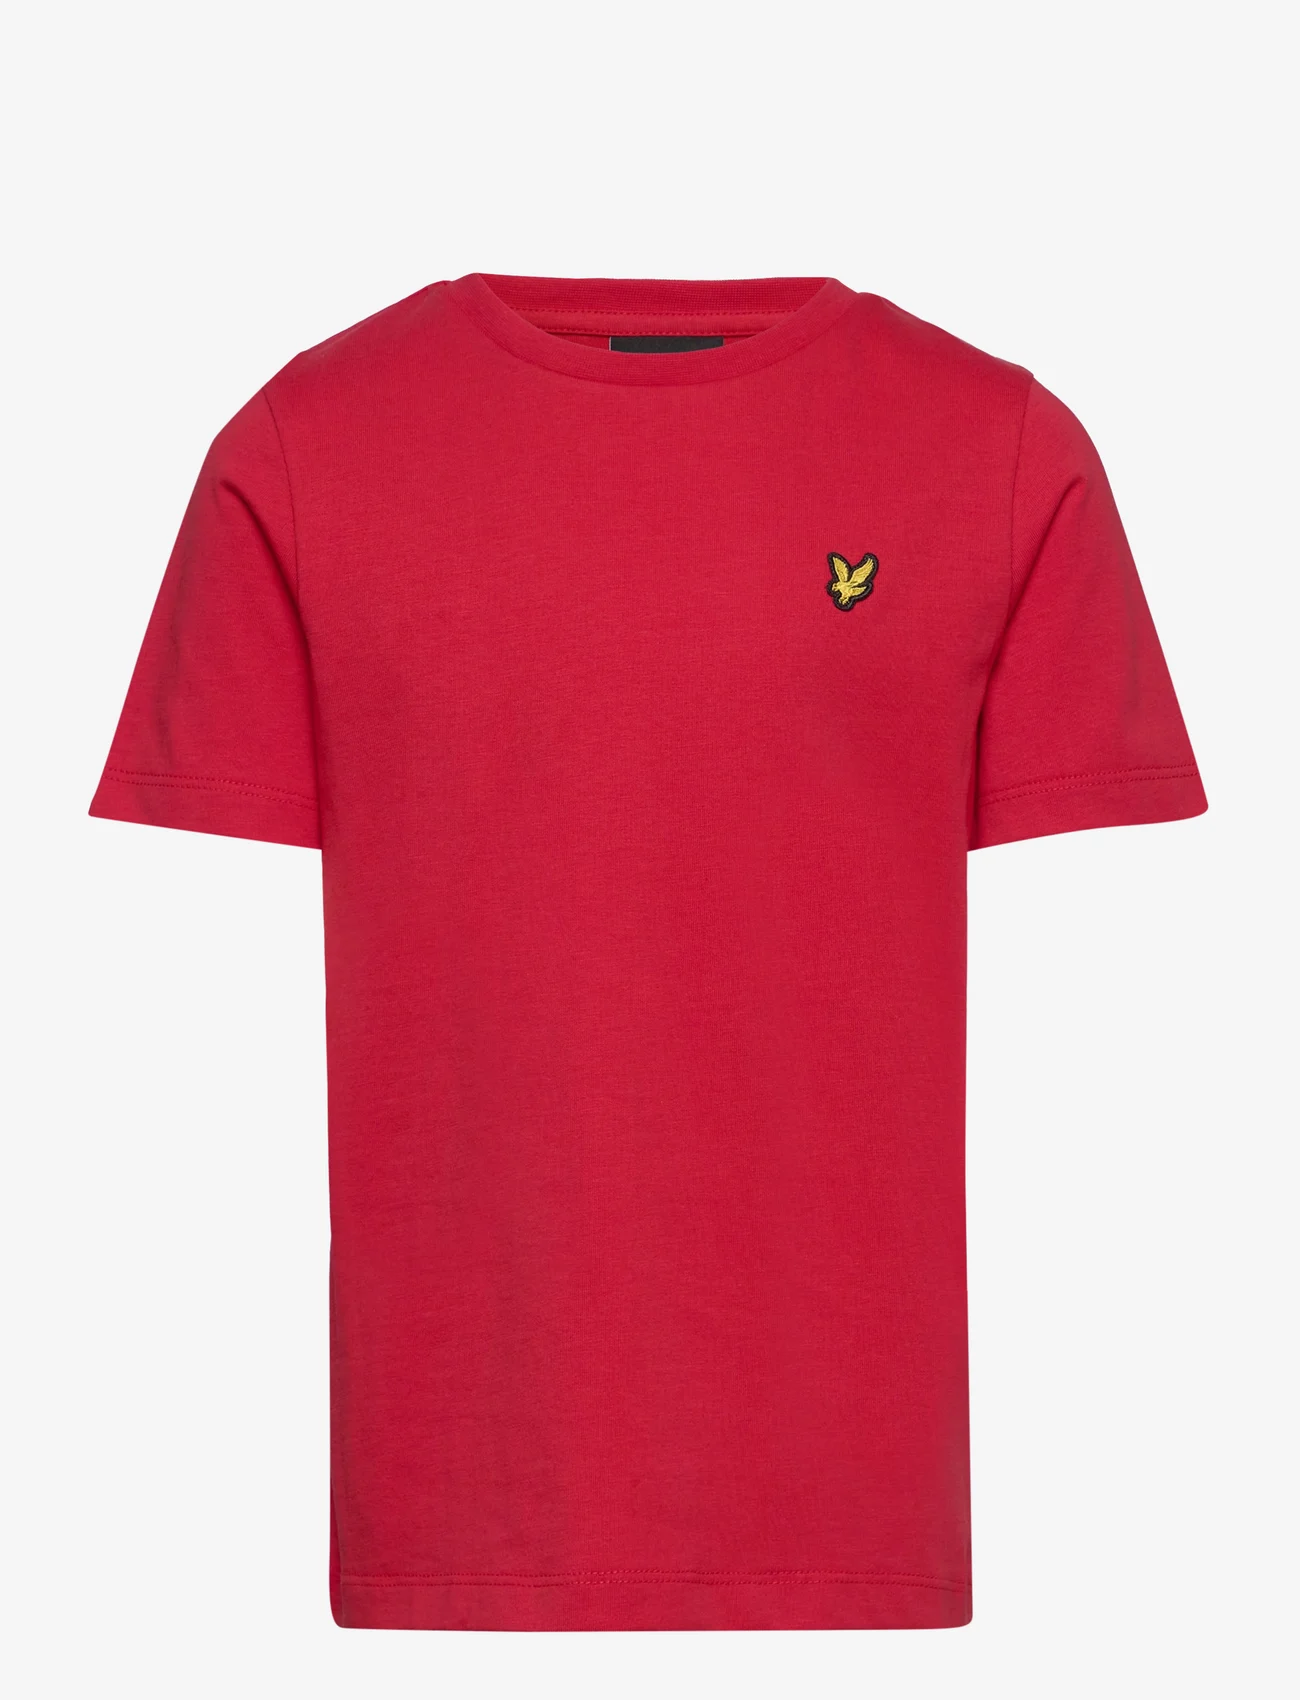 Lyle & Scott - Plain T-shirt - kurzärmelige - z799 gala red - 0